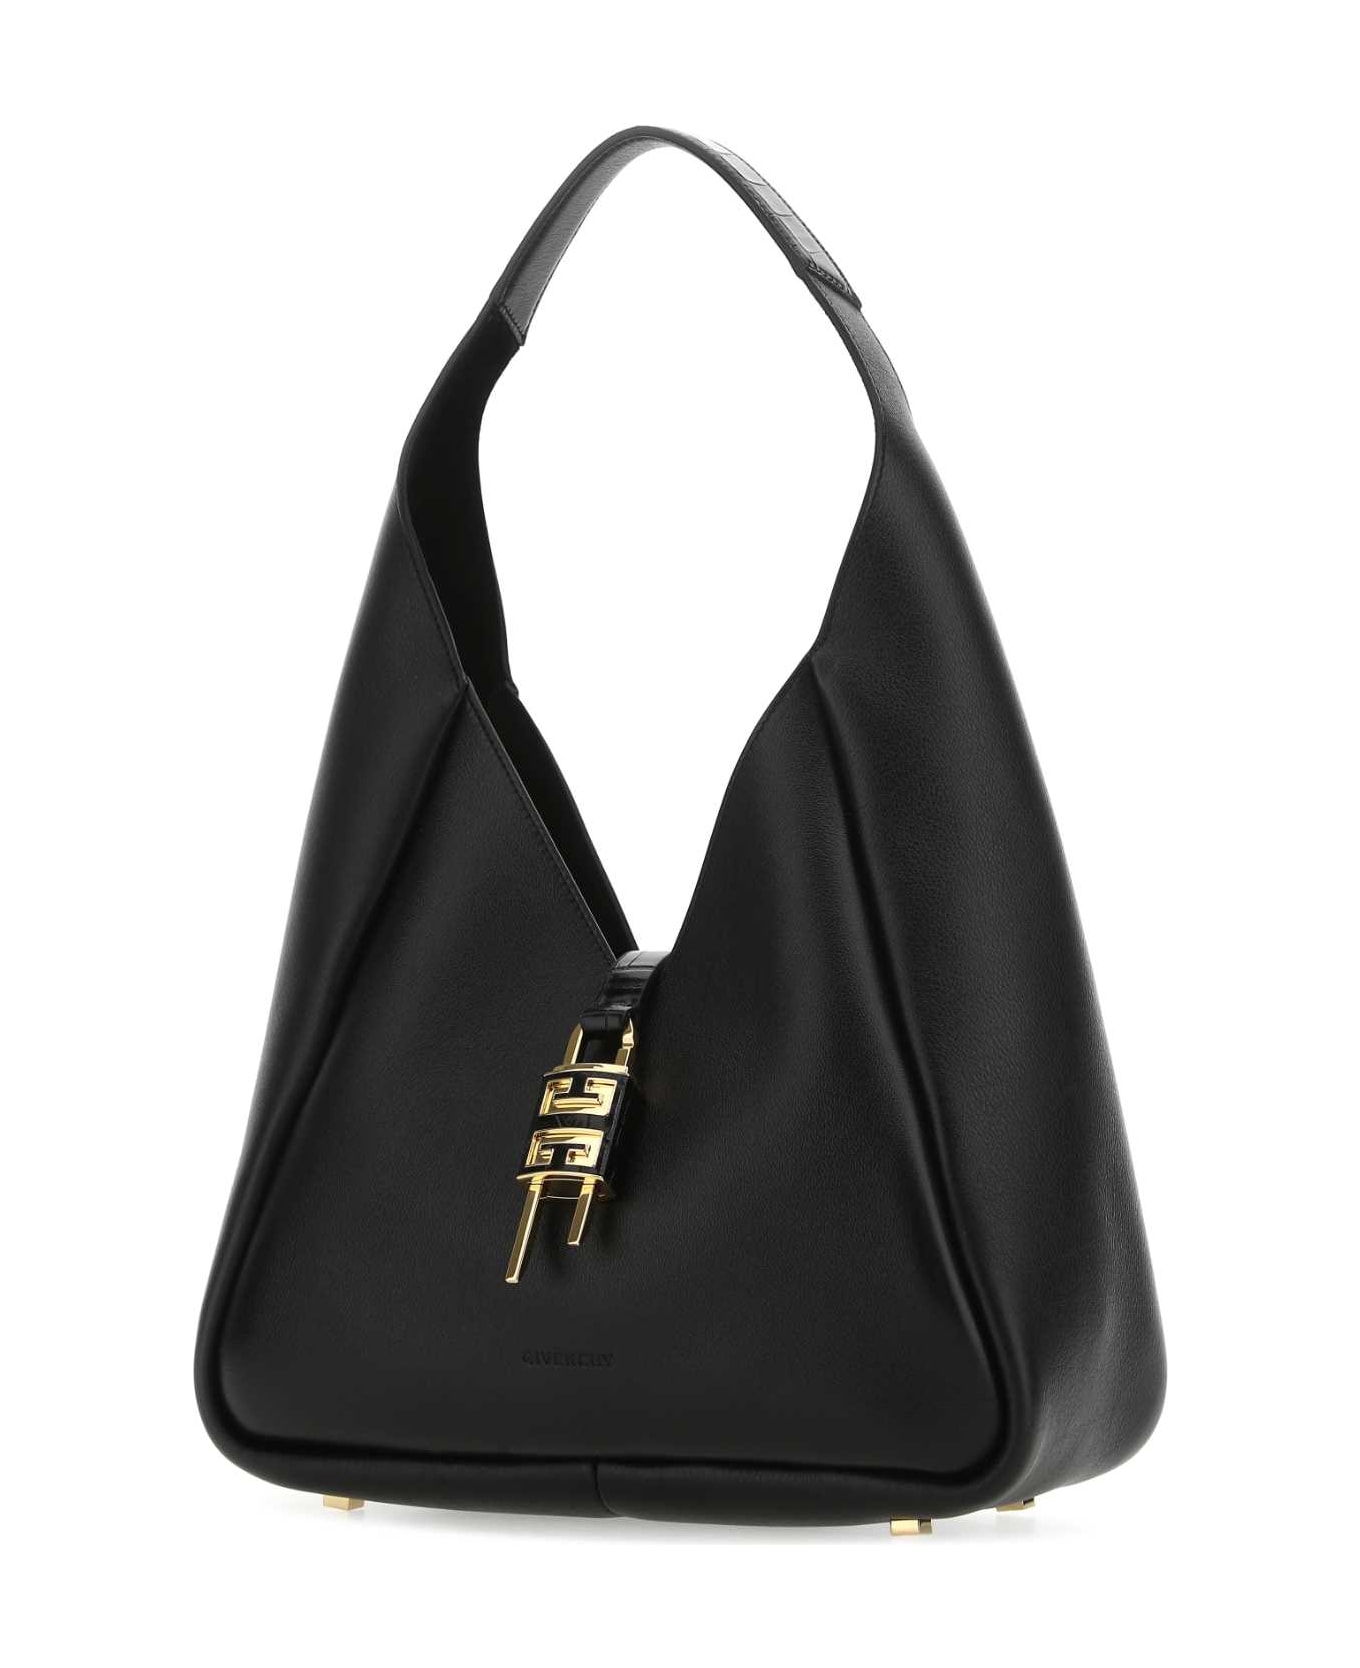 Givenchy Black Leather Medium G-hobo Handbag - 001